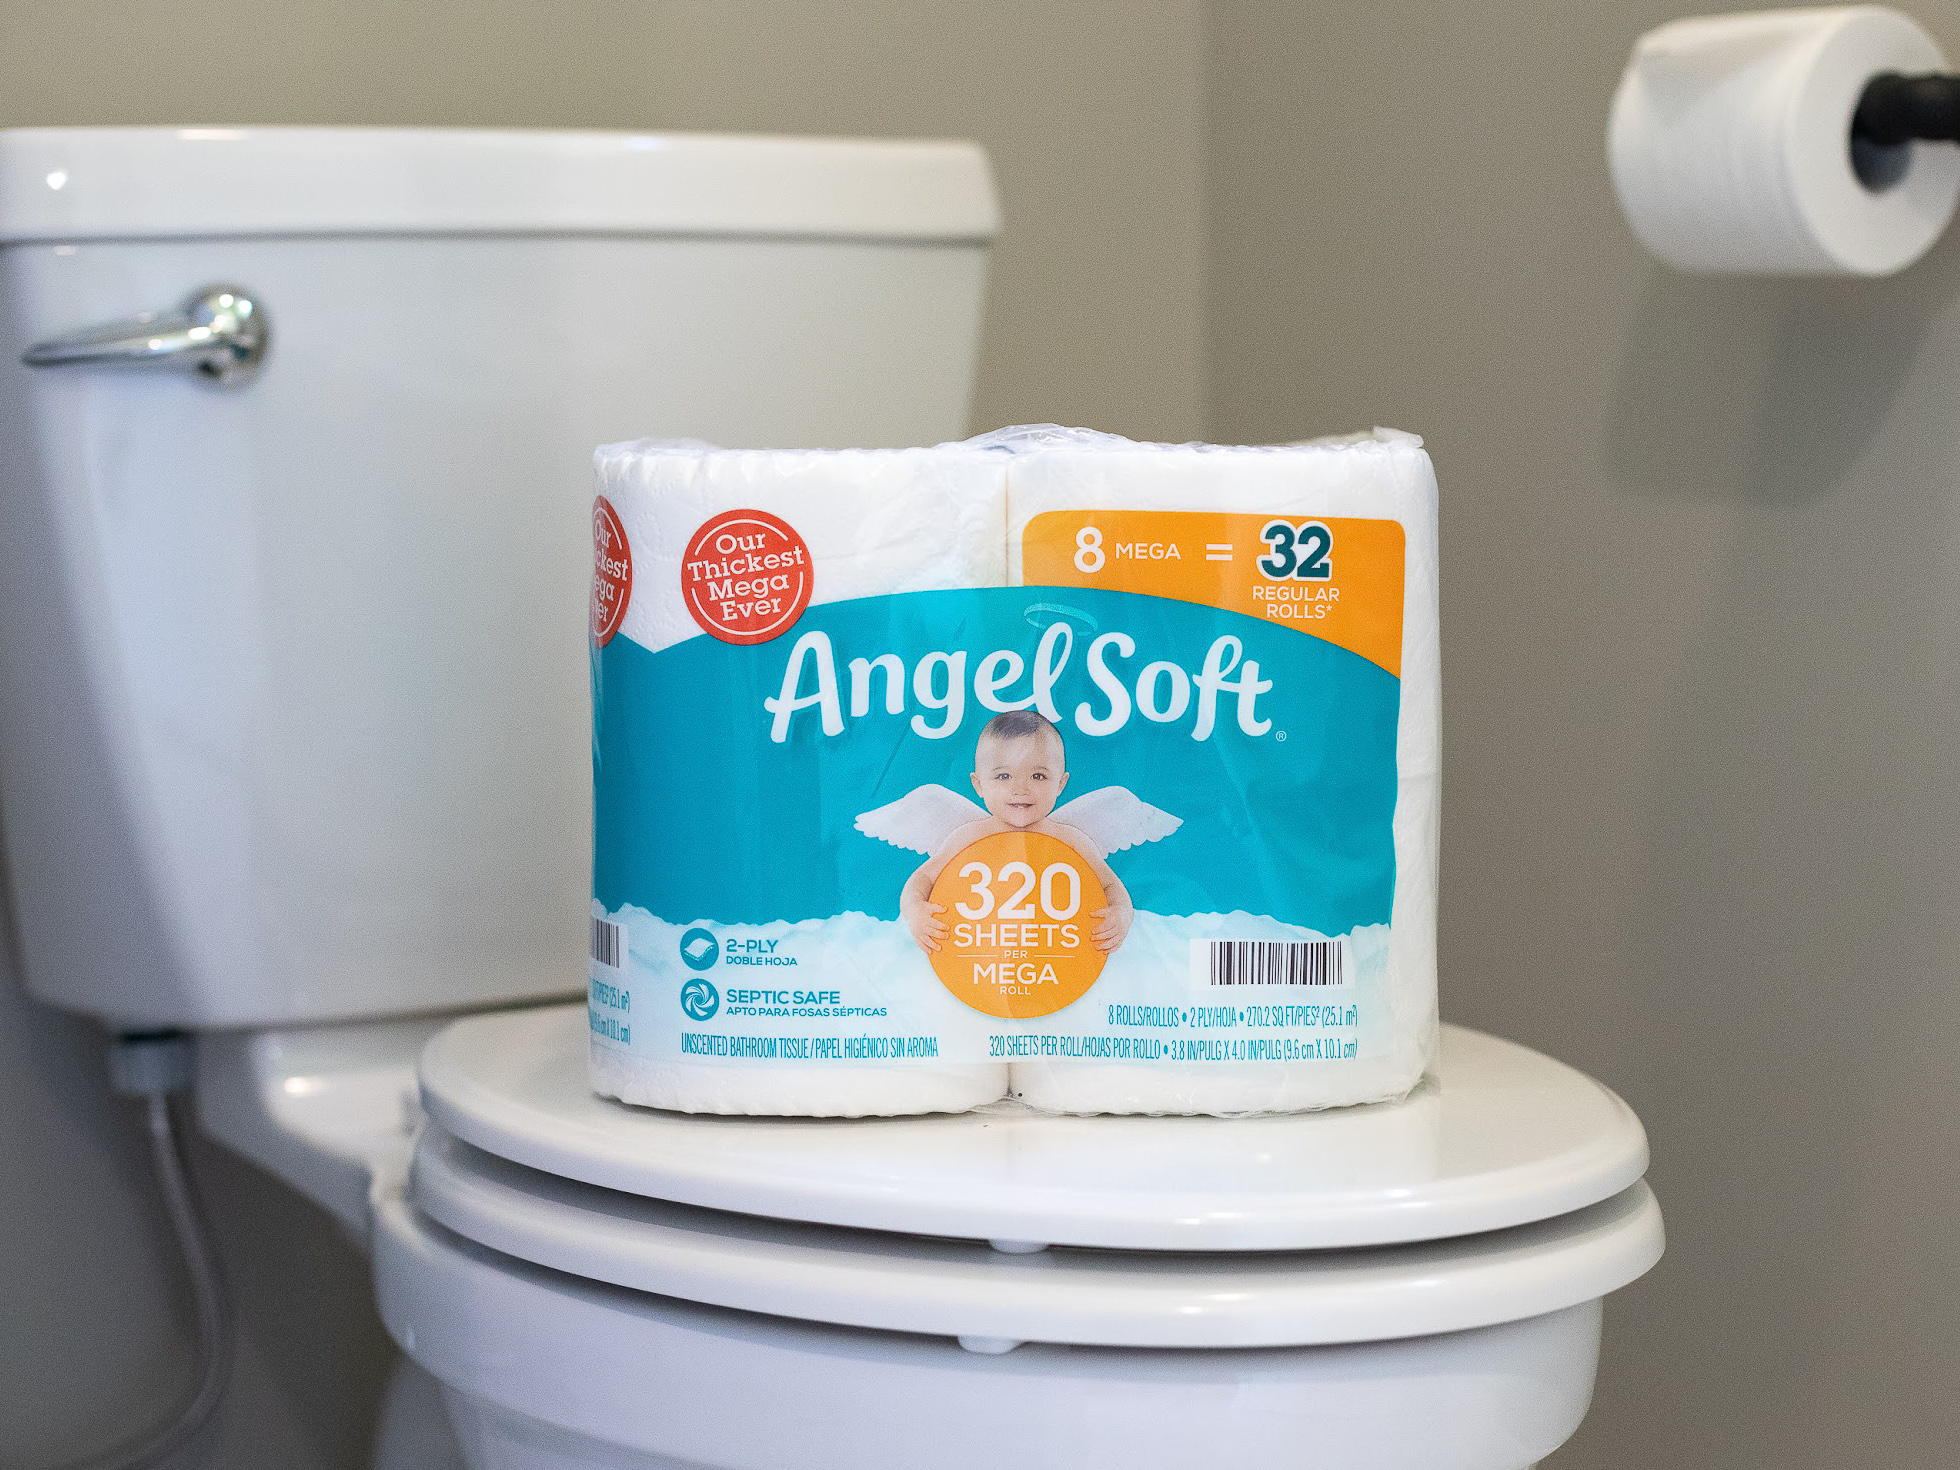 Angel Soft Bath Tissue Just $4.99 At Kroger – Save $3 Per Pack